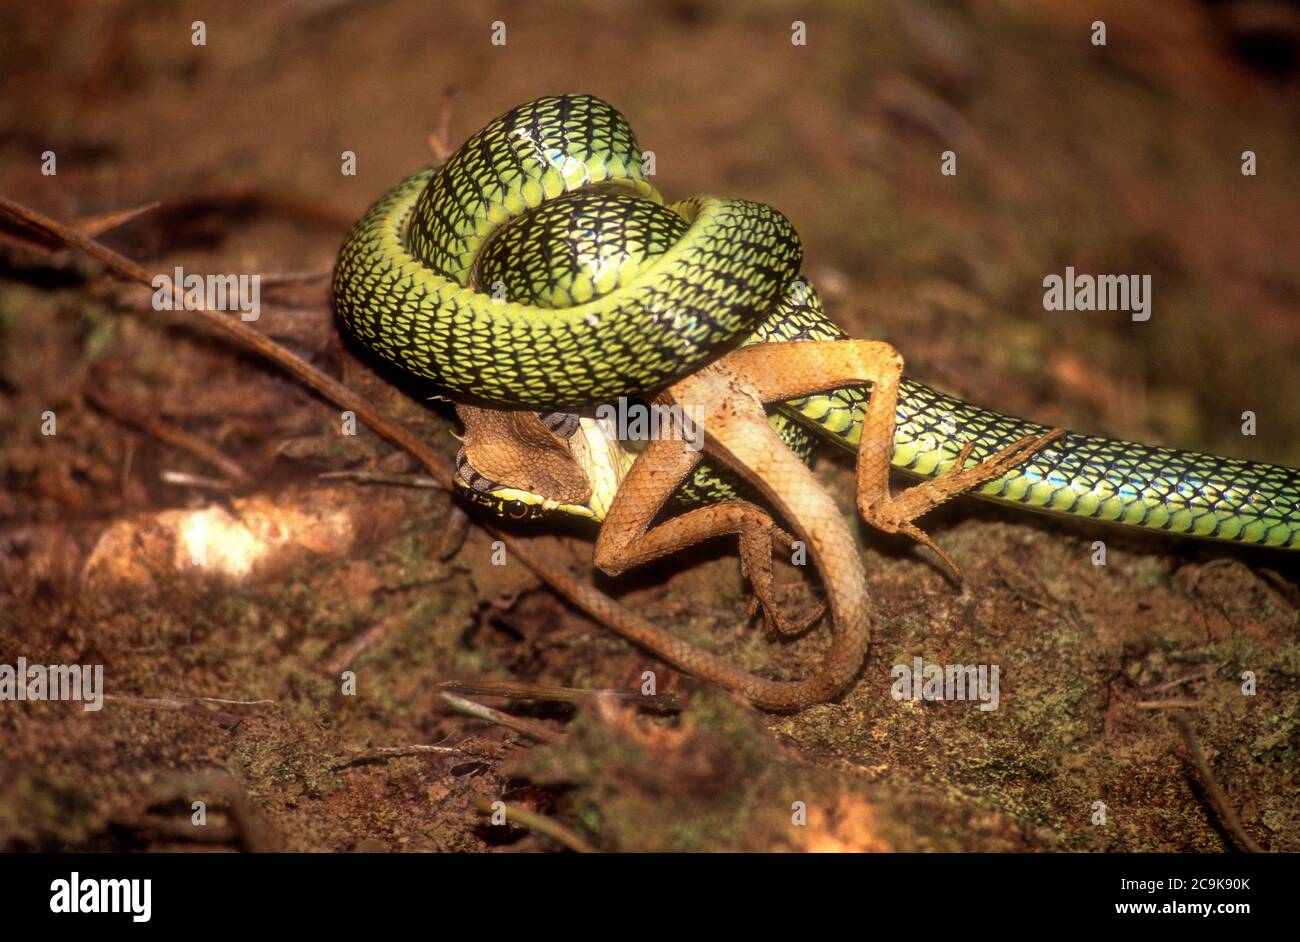 Red Tailed Racer Snake Gonyosoma Oxycephalum Eating Brown Lizard Phang Nga Thailand Se Asia Stock Photo Alamy